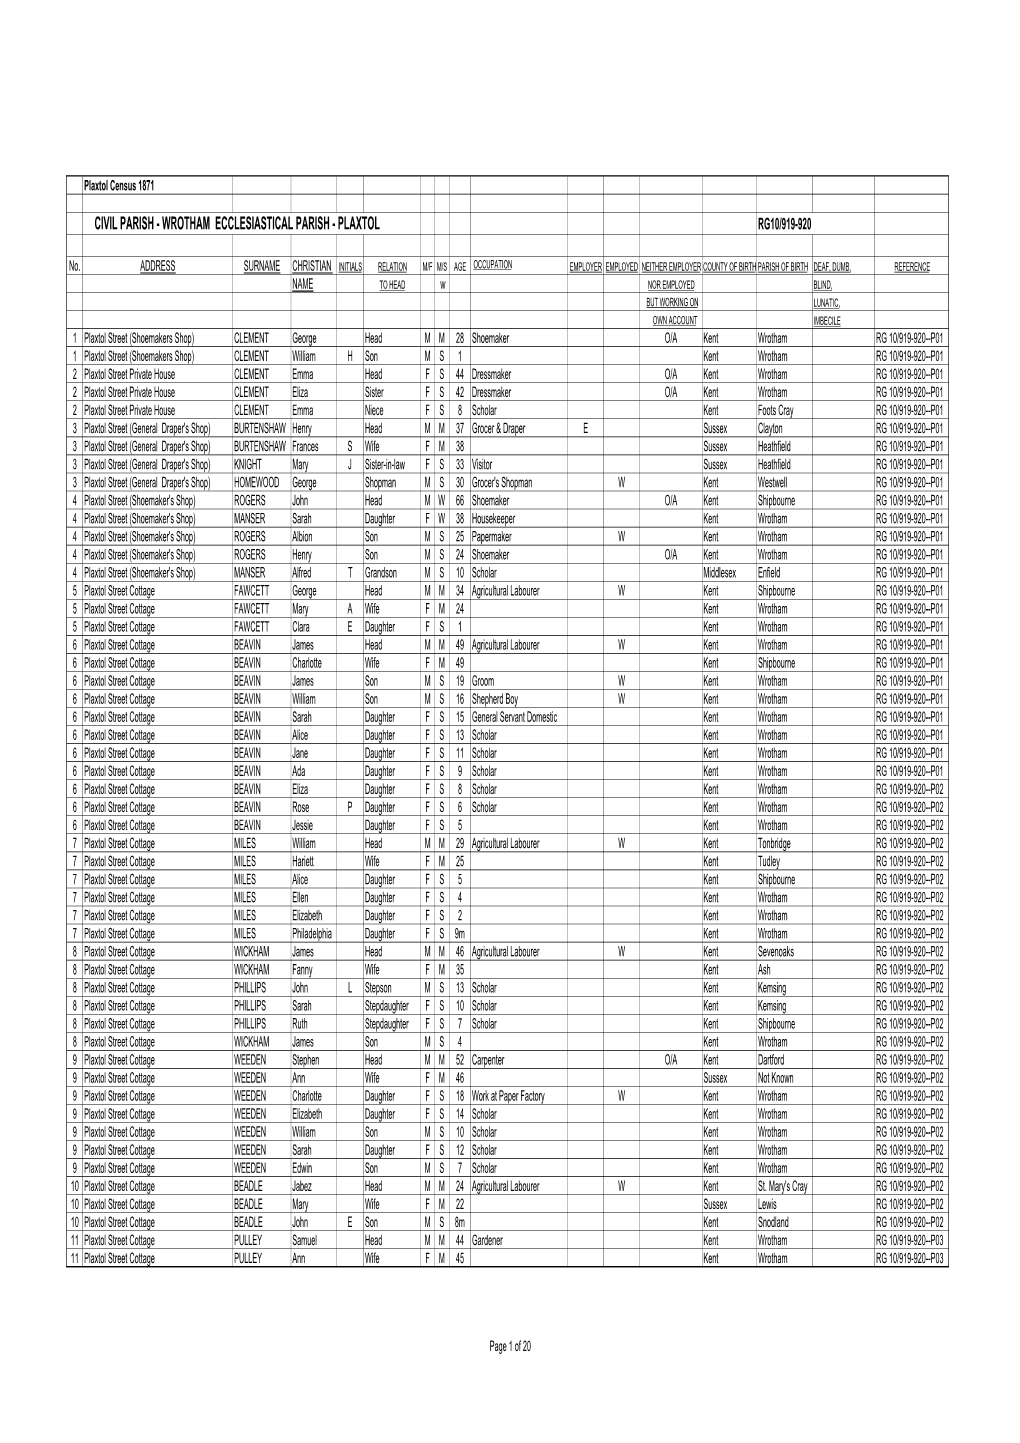 Plaxtol Census Data 1871